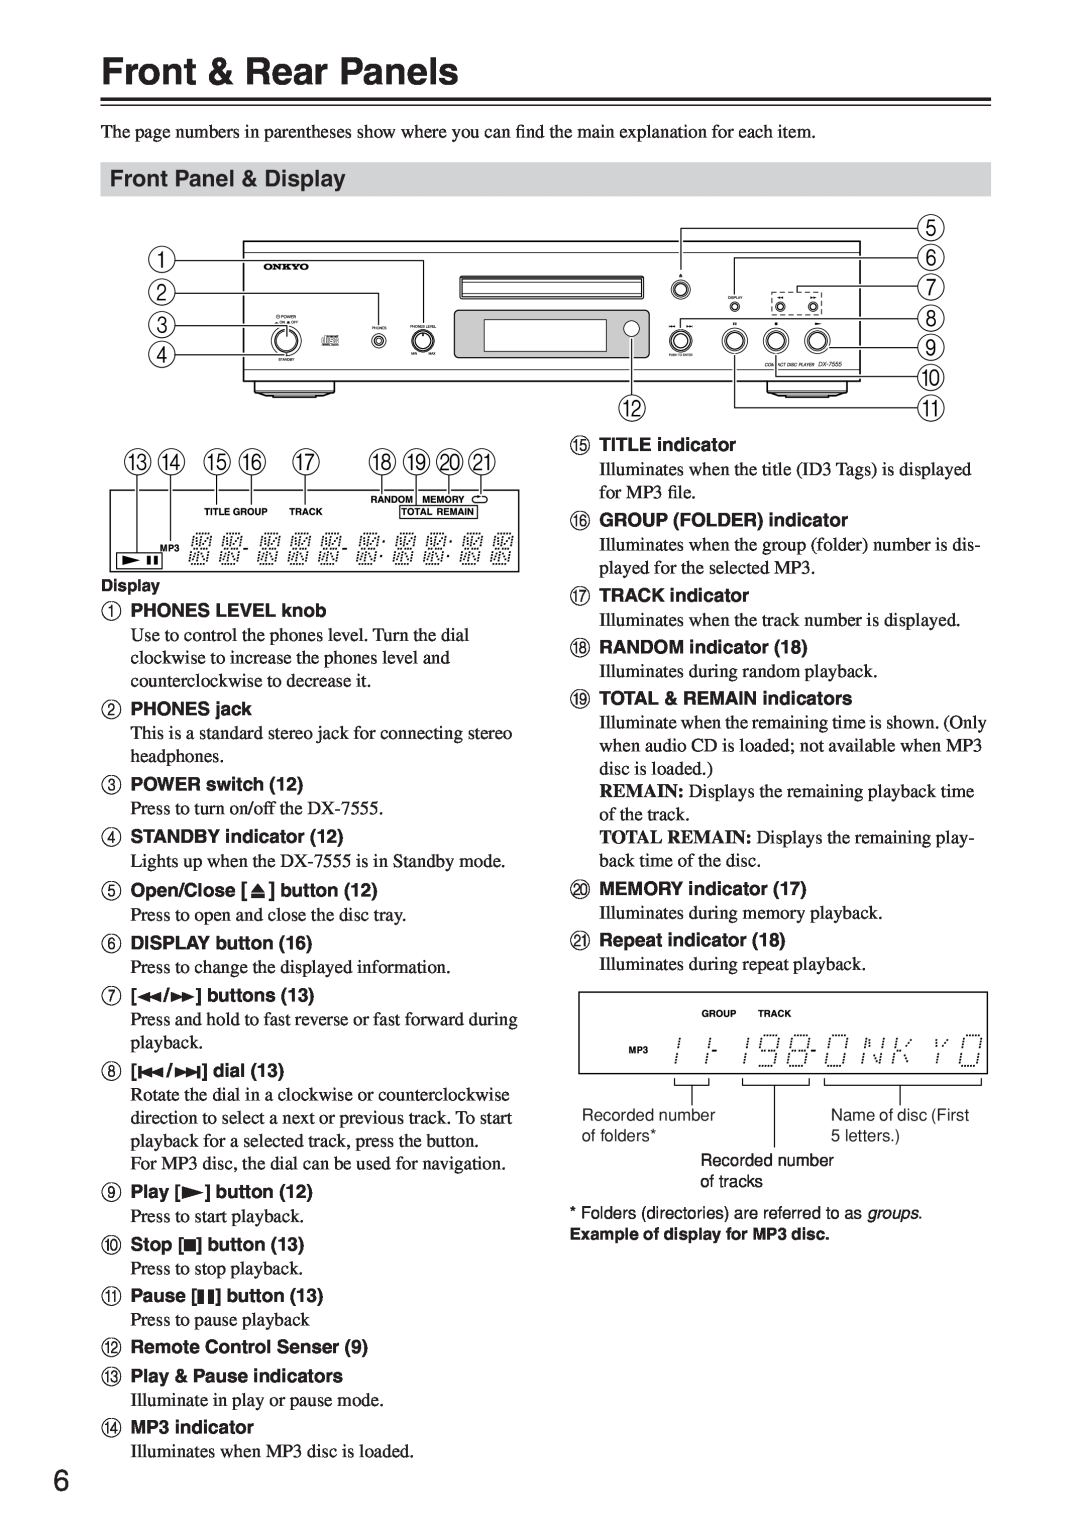 Onkyo DX-7555 instruction manual Front & Rear Panels 